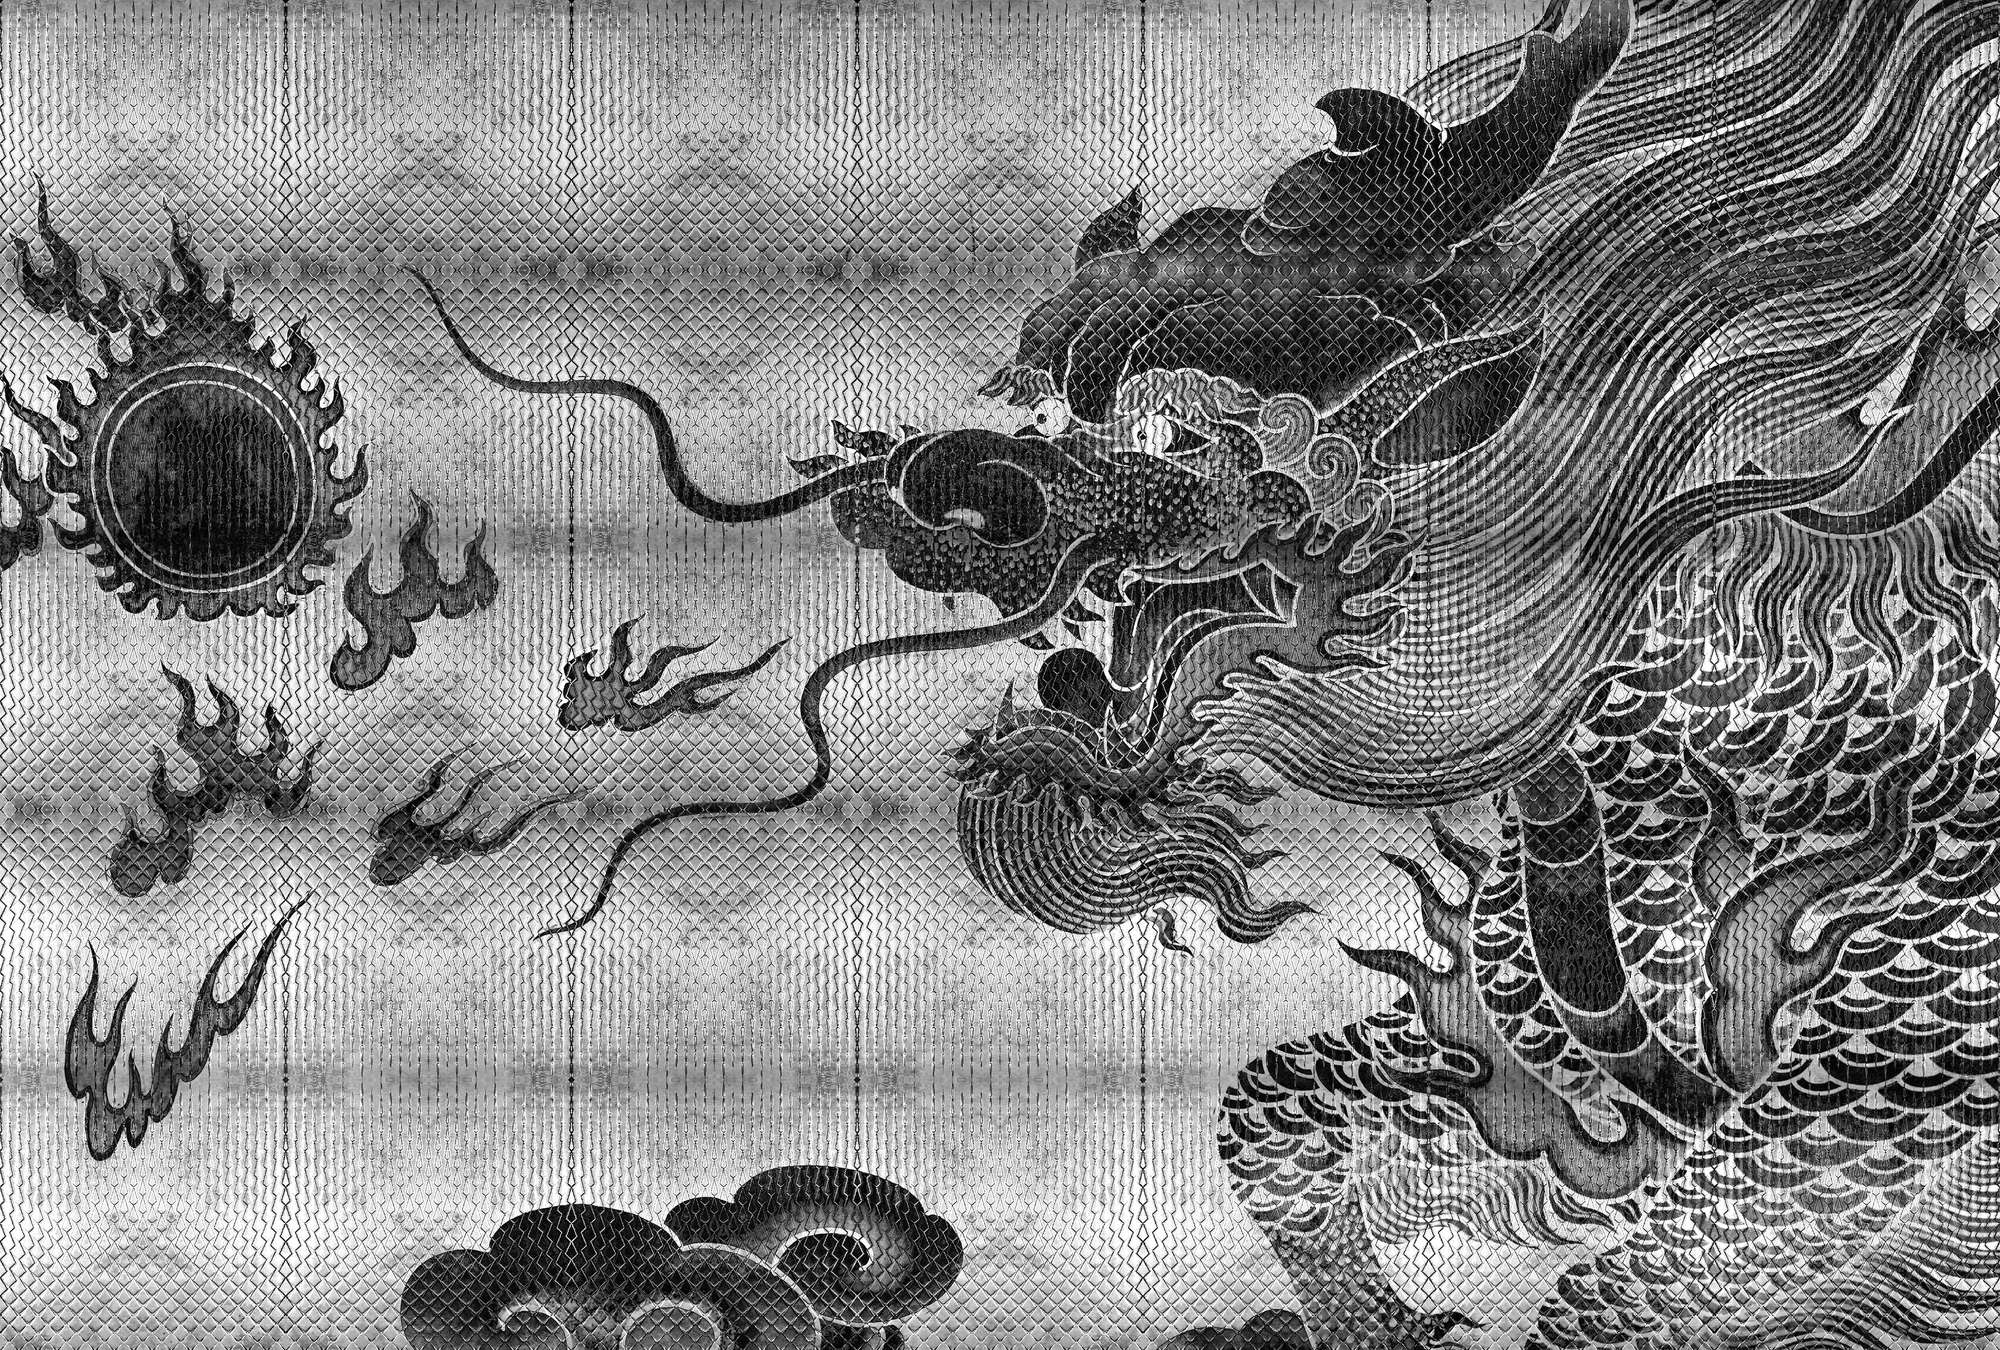             Shenzen 3 - dragon mural metallic silver in Asian style
        